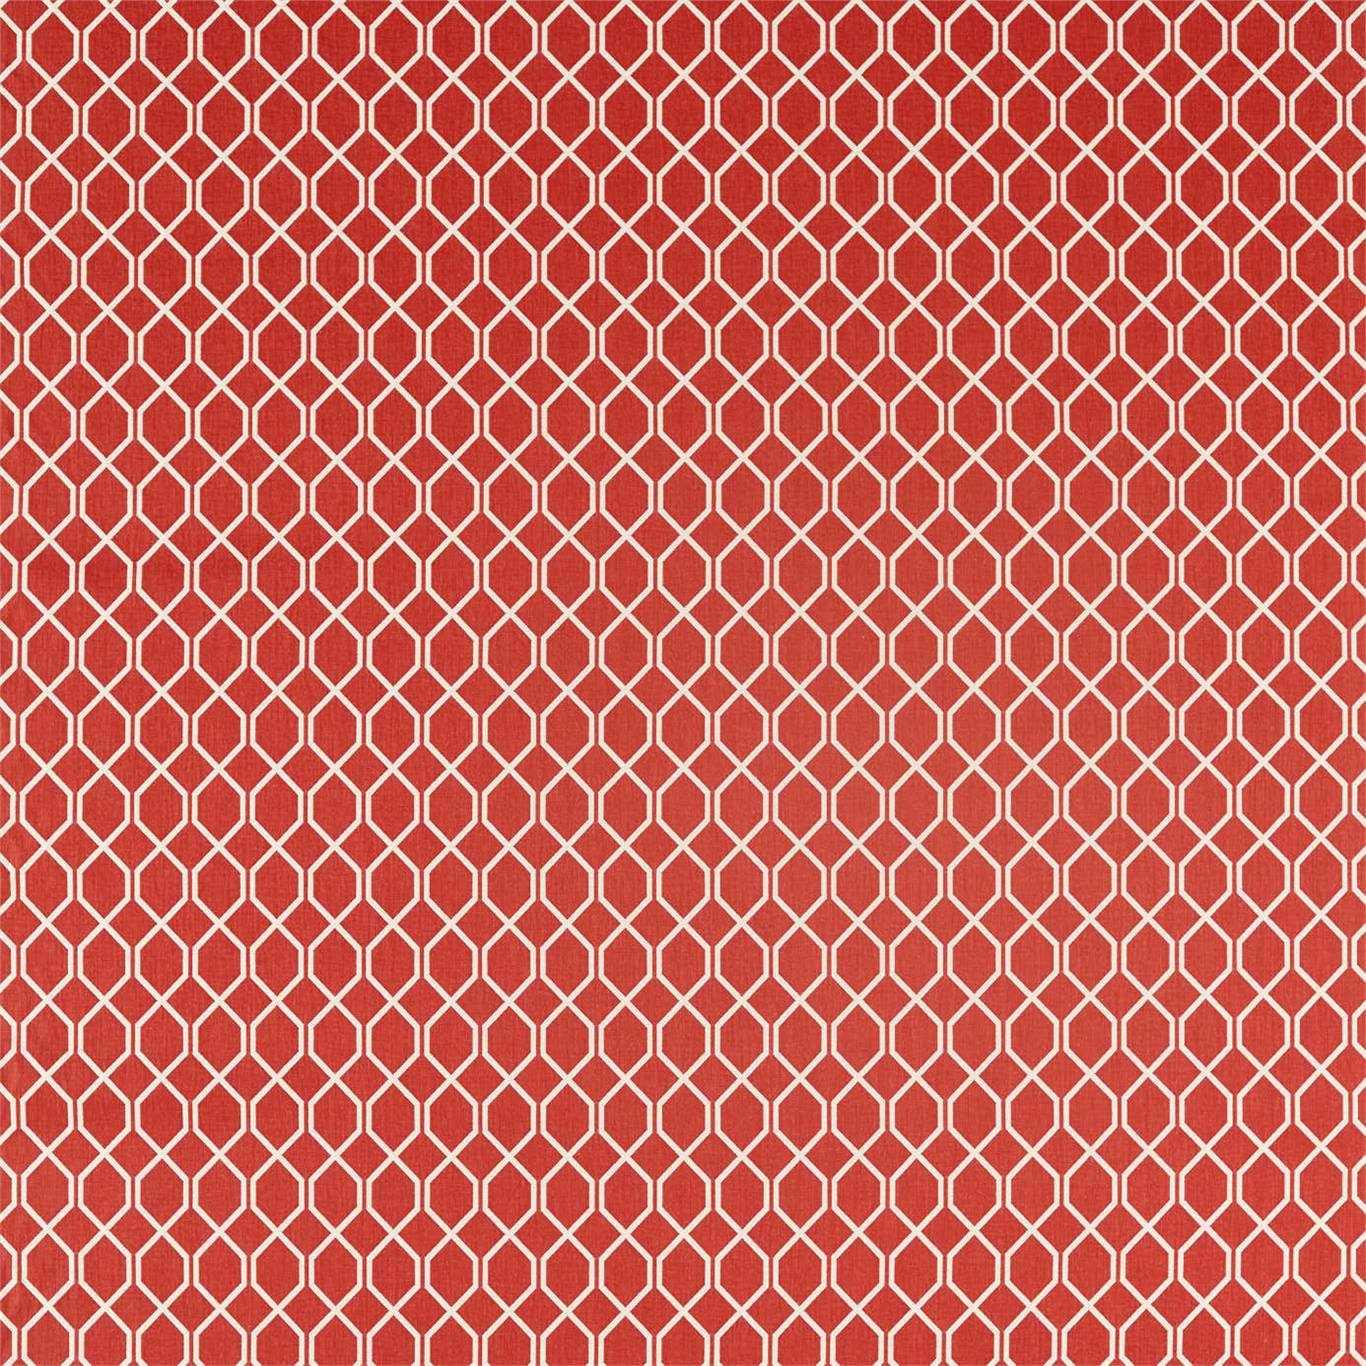 Botanic Trellis Fabric by Sanderson - DLNC236788 - Bengal Red